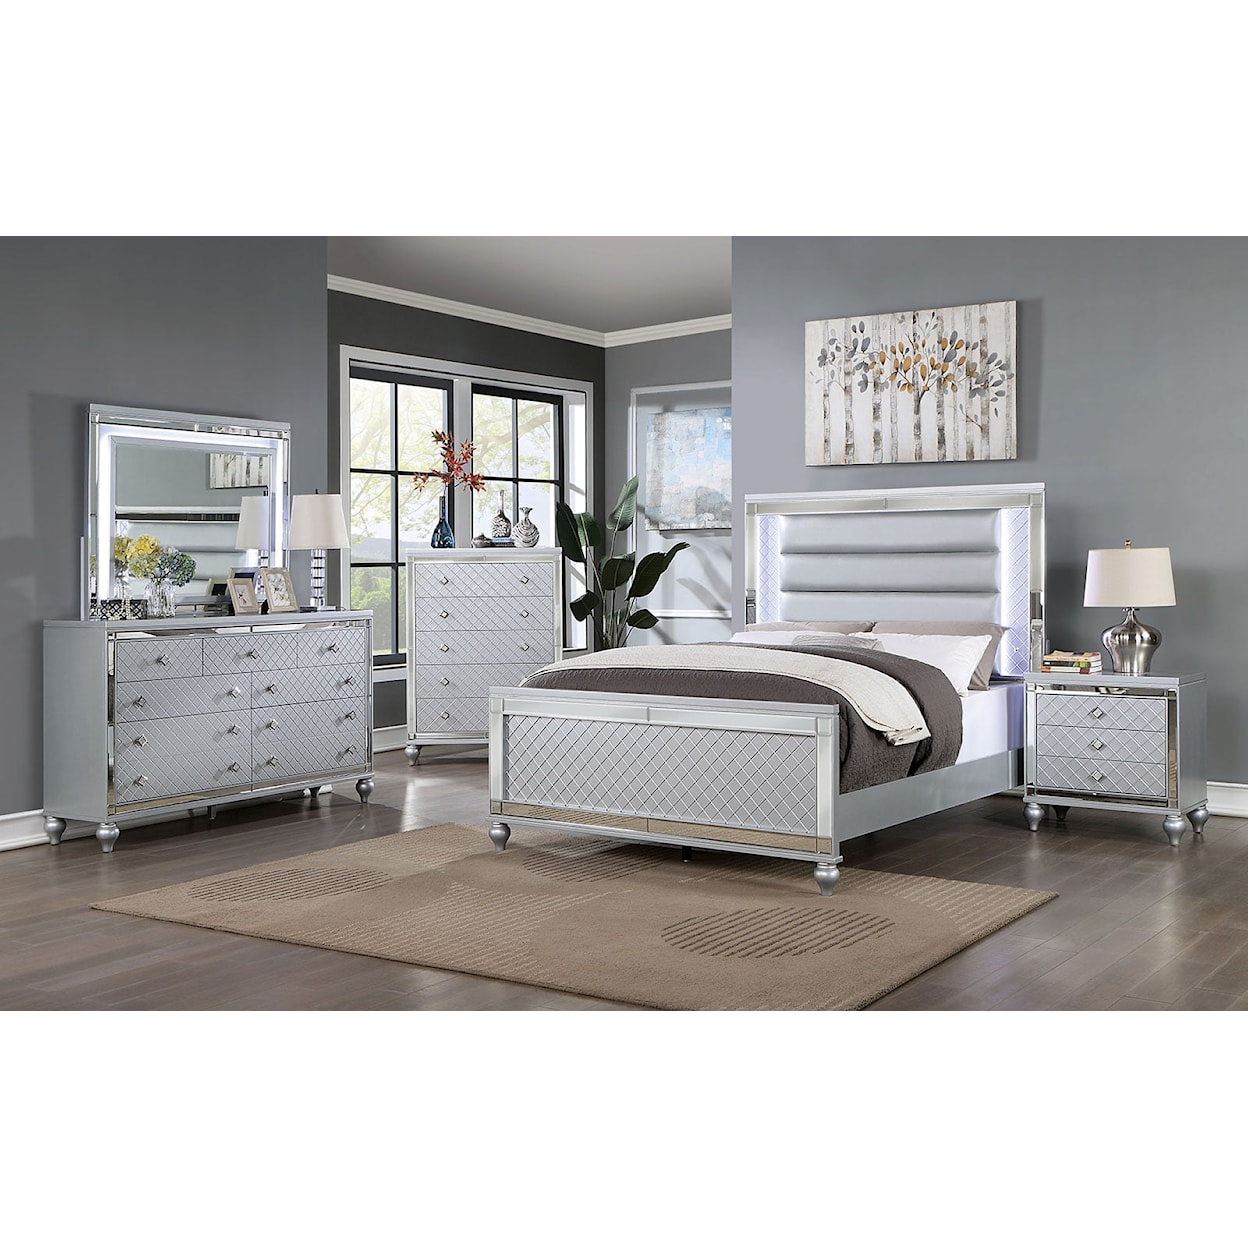 Furniture of America CALANDRIA 5-Piece Queen Bedroom Set with Chest